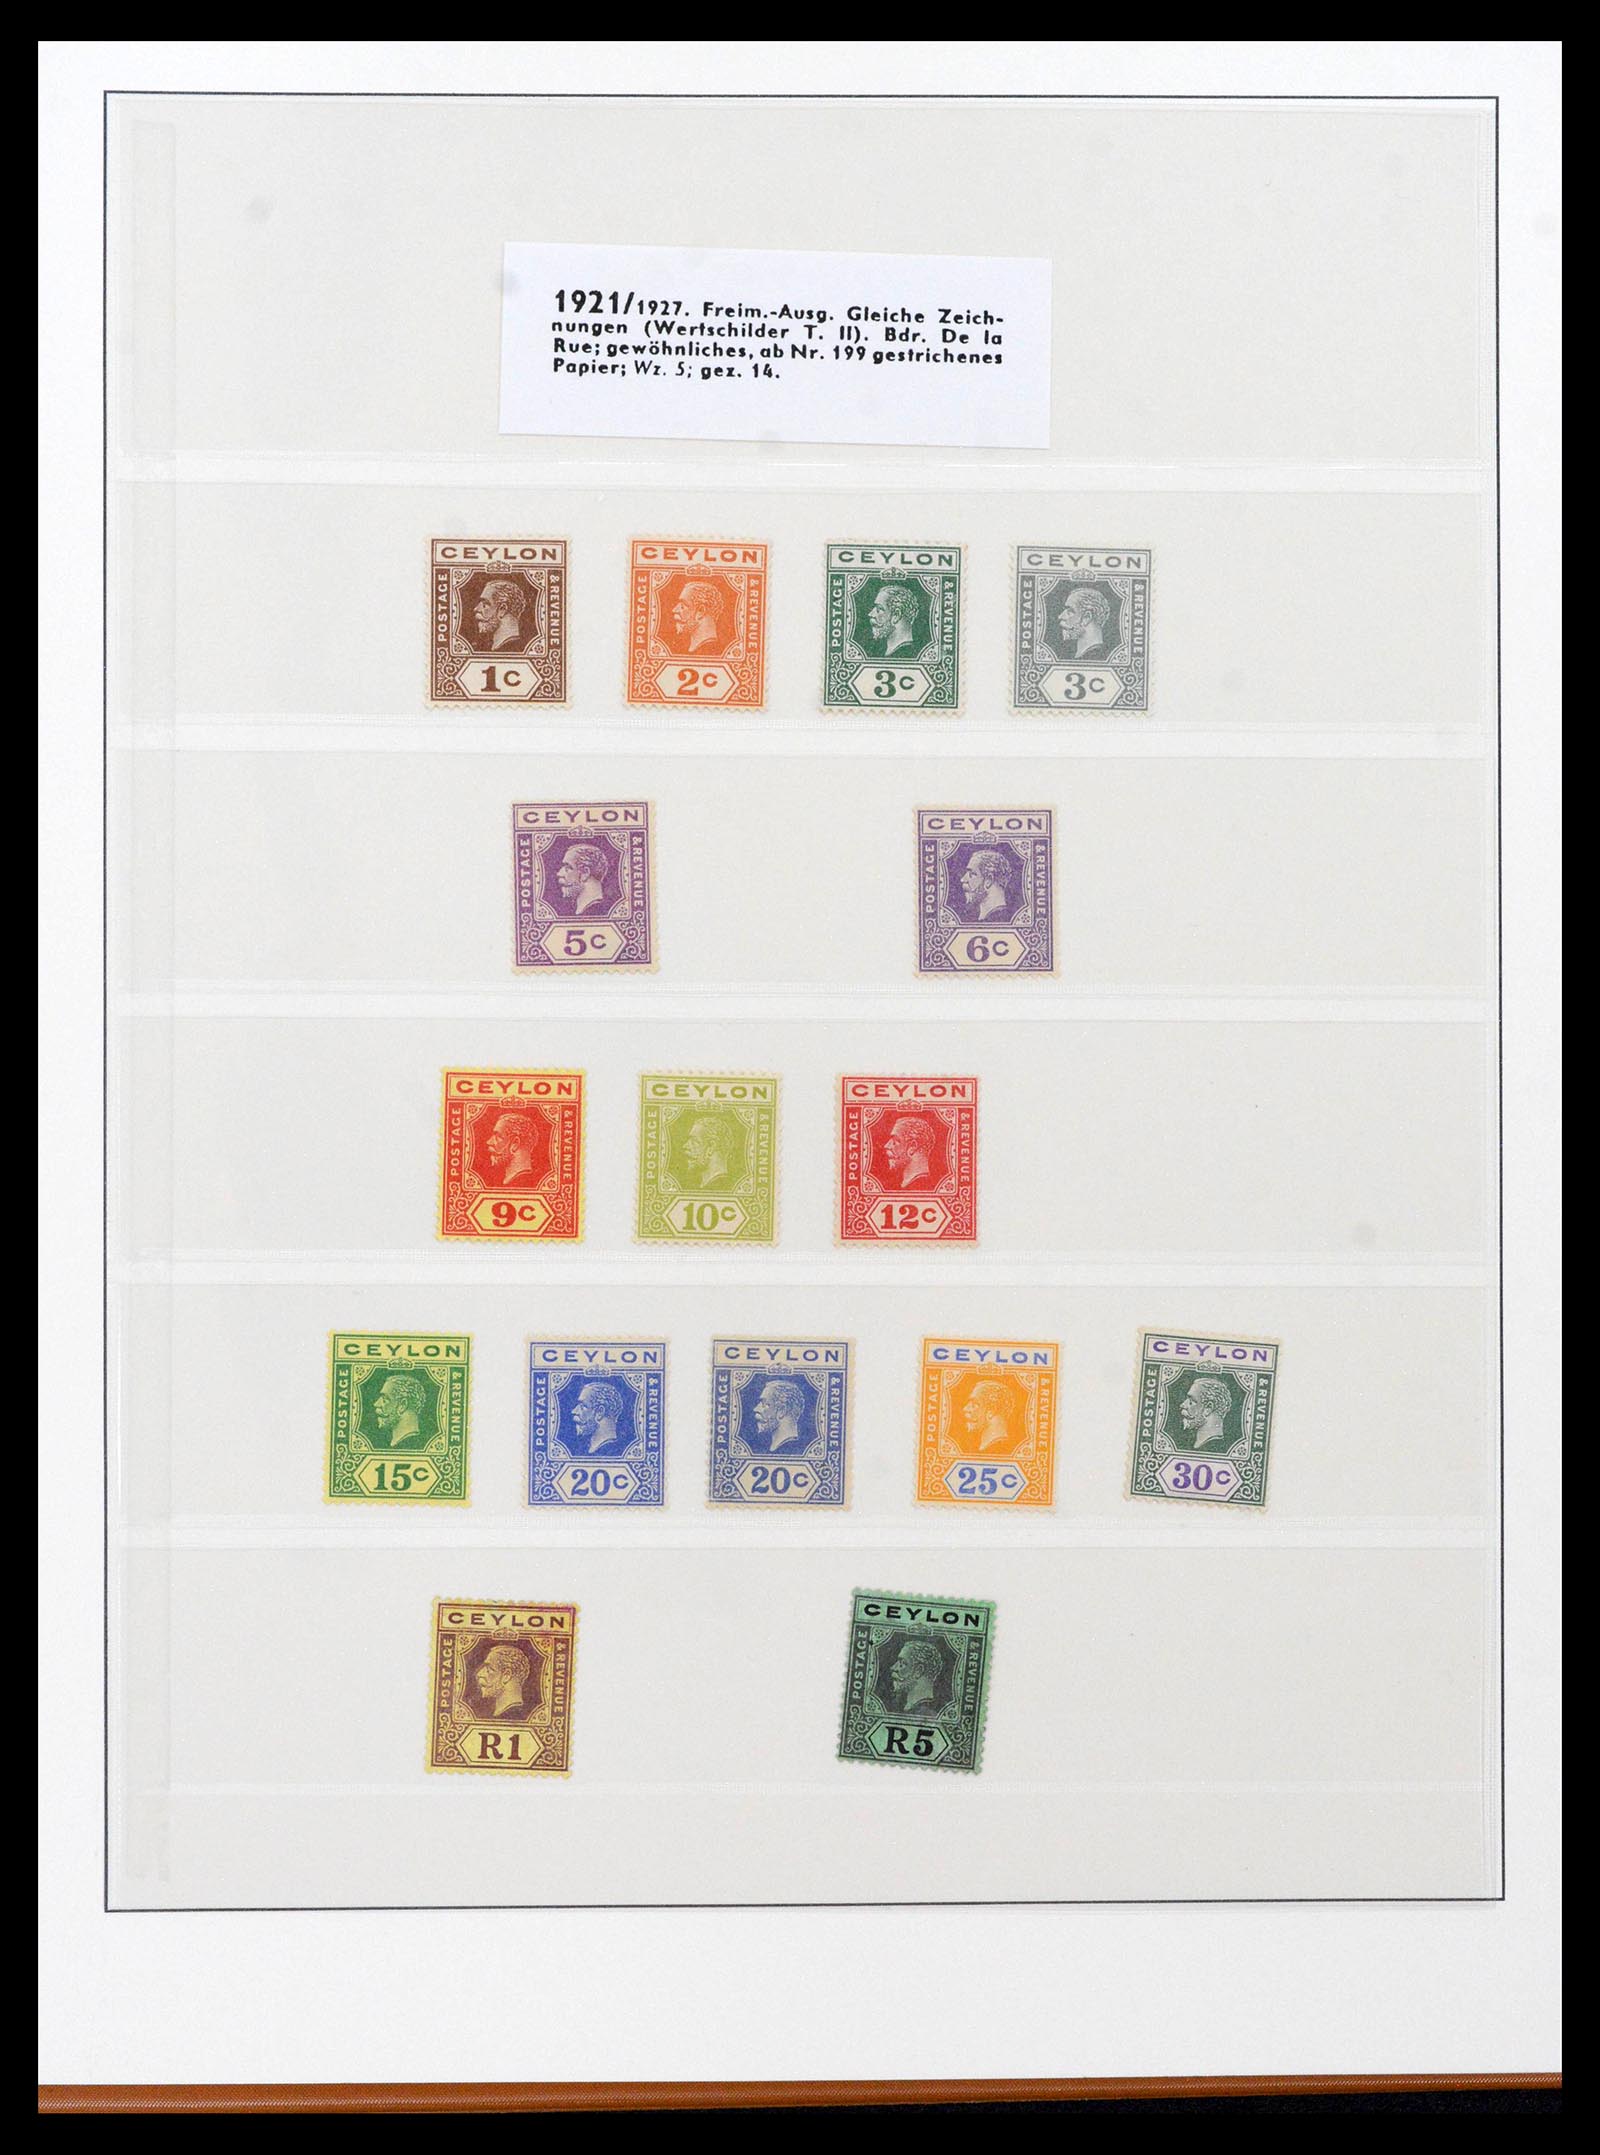 39003 0013 - Stamp collection 39003 Ceylon/Sri Lanka 1857-2003.